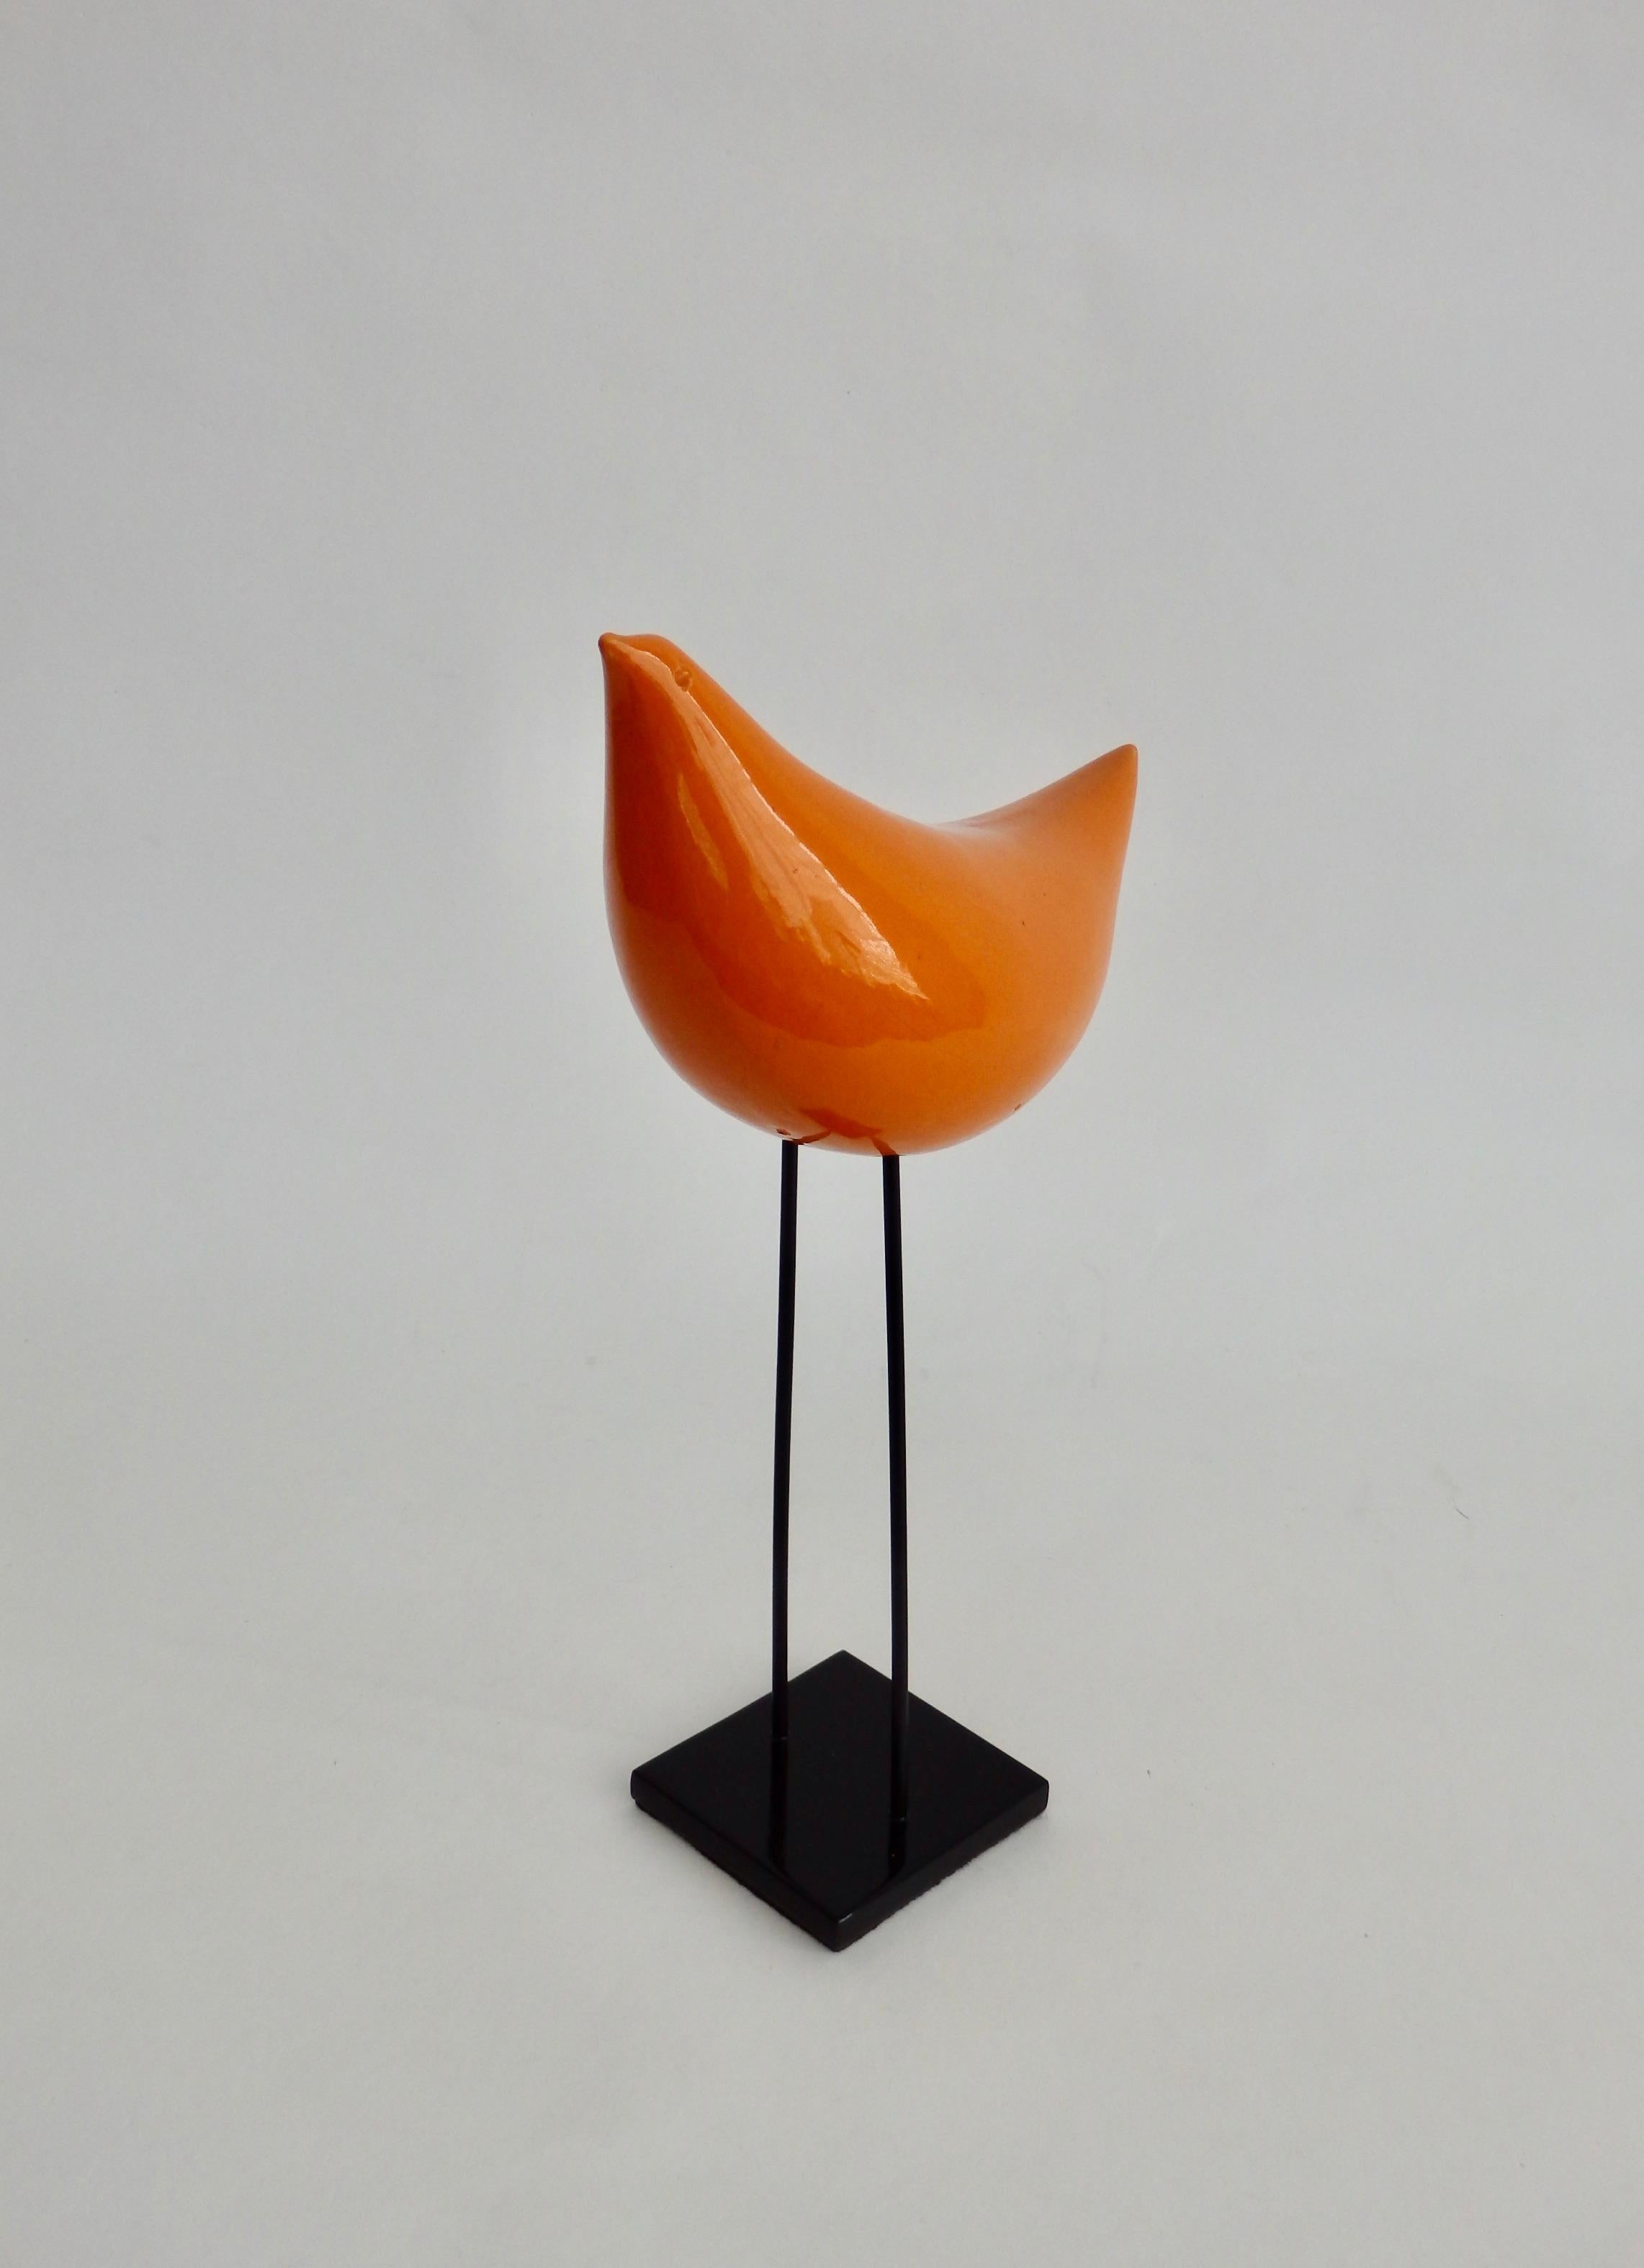 Steel Ado Londi for Bitossi Raymor Stylized Orange Bird Sculpture on Iron Base